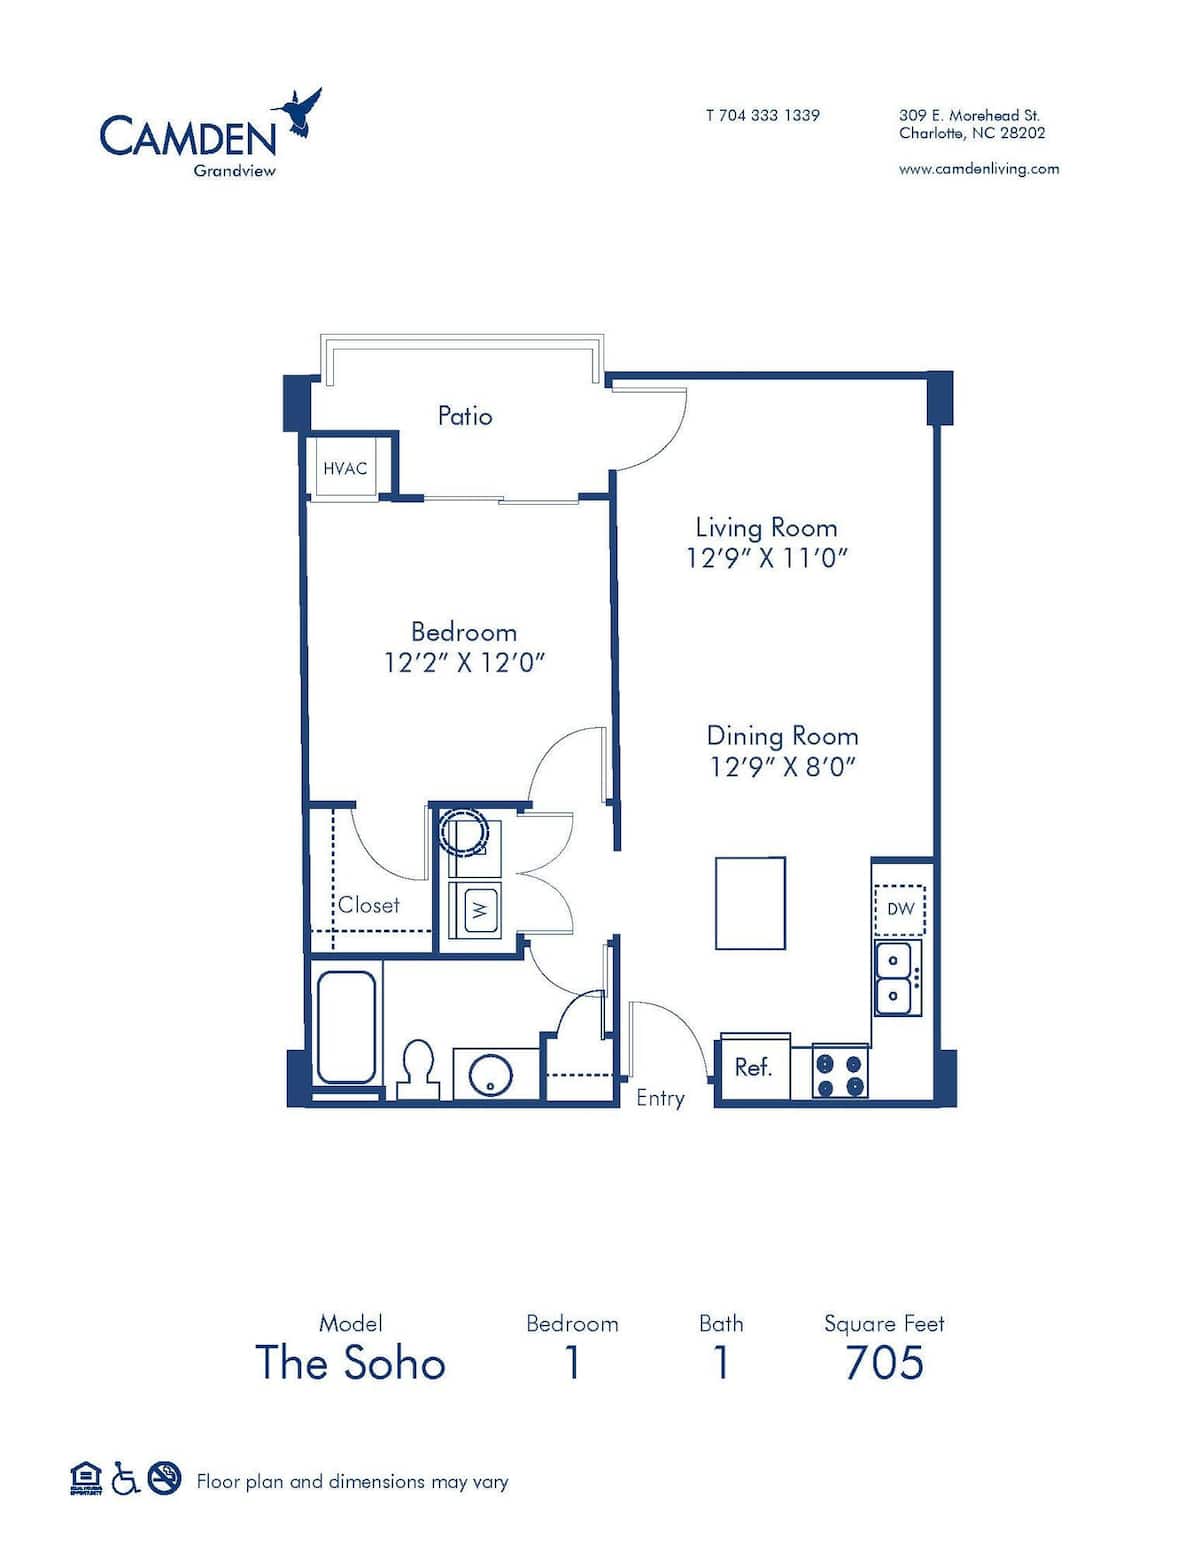 Floorplan diagram for The Soho, showing 1 bedroom